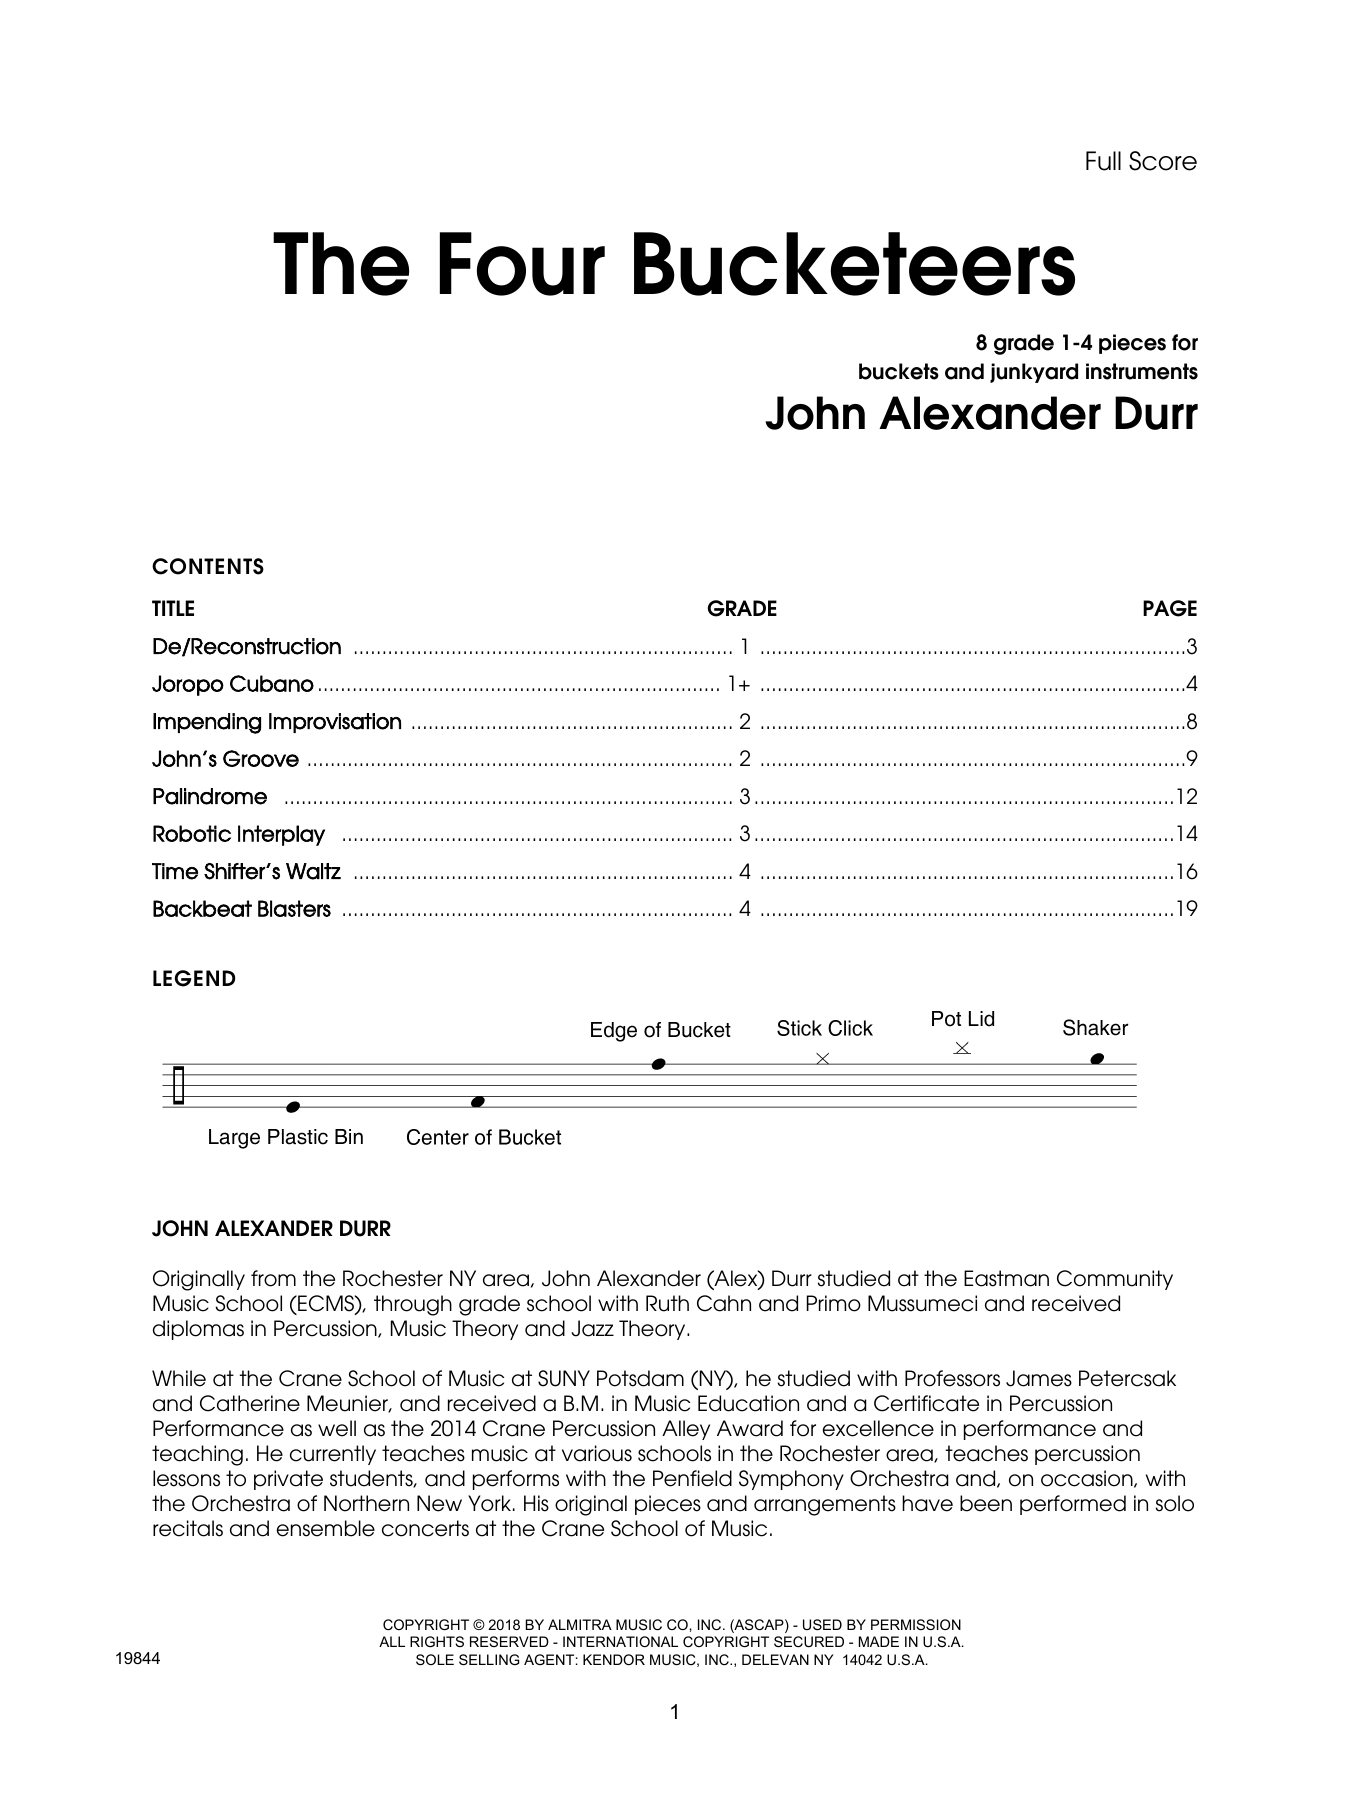 Download John Durr The Four Bucketeers - Full Score Sheet Music